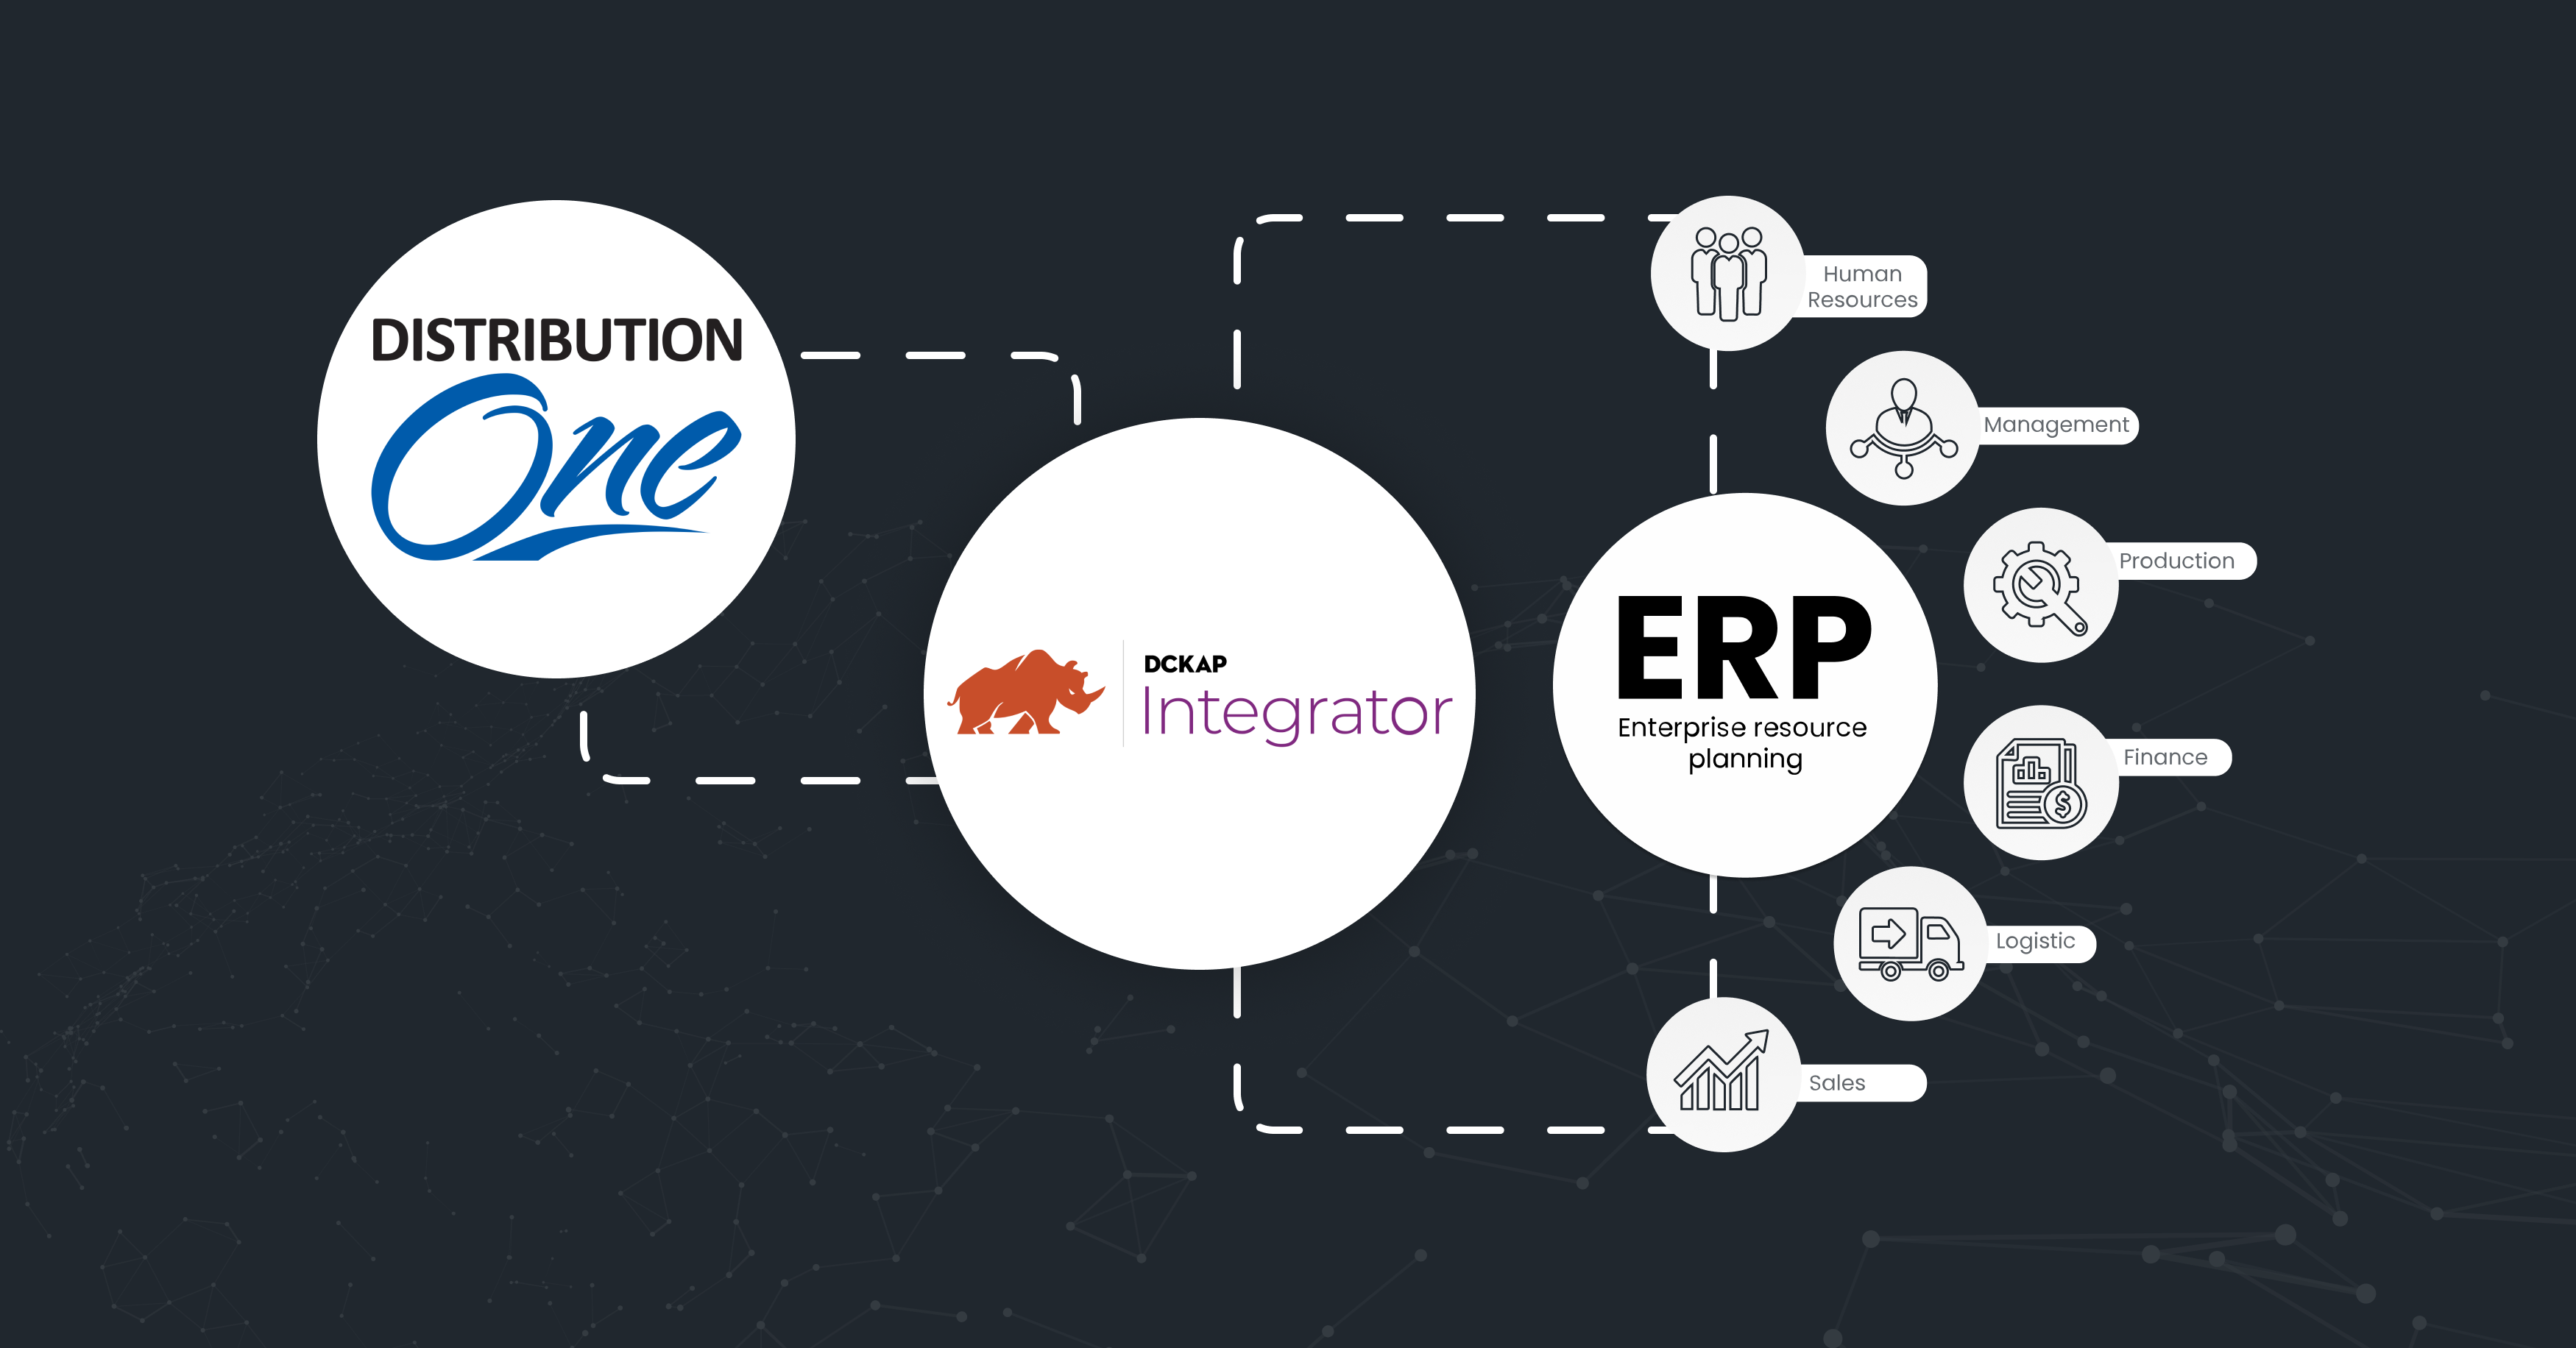 Distribution One ERP Integration - DCKAP Integrator